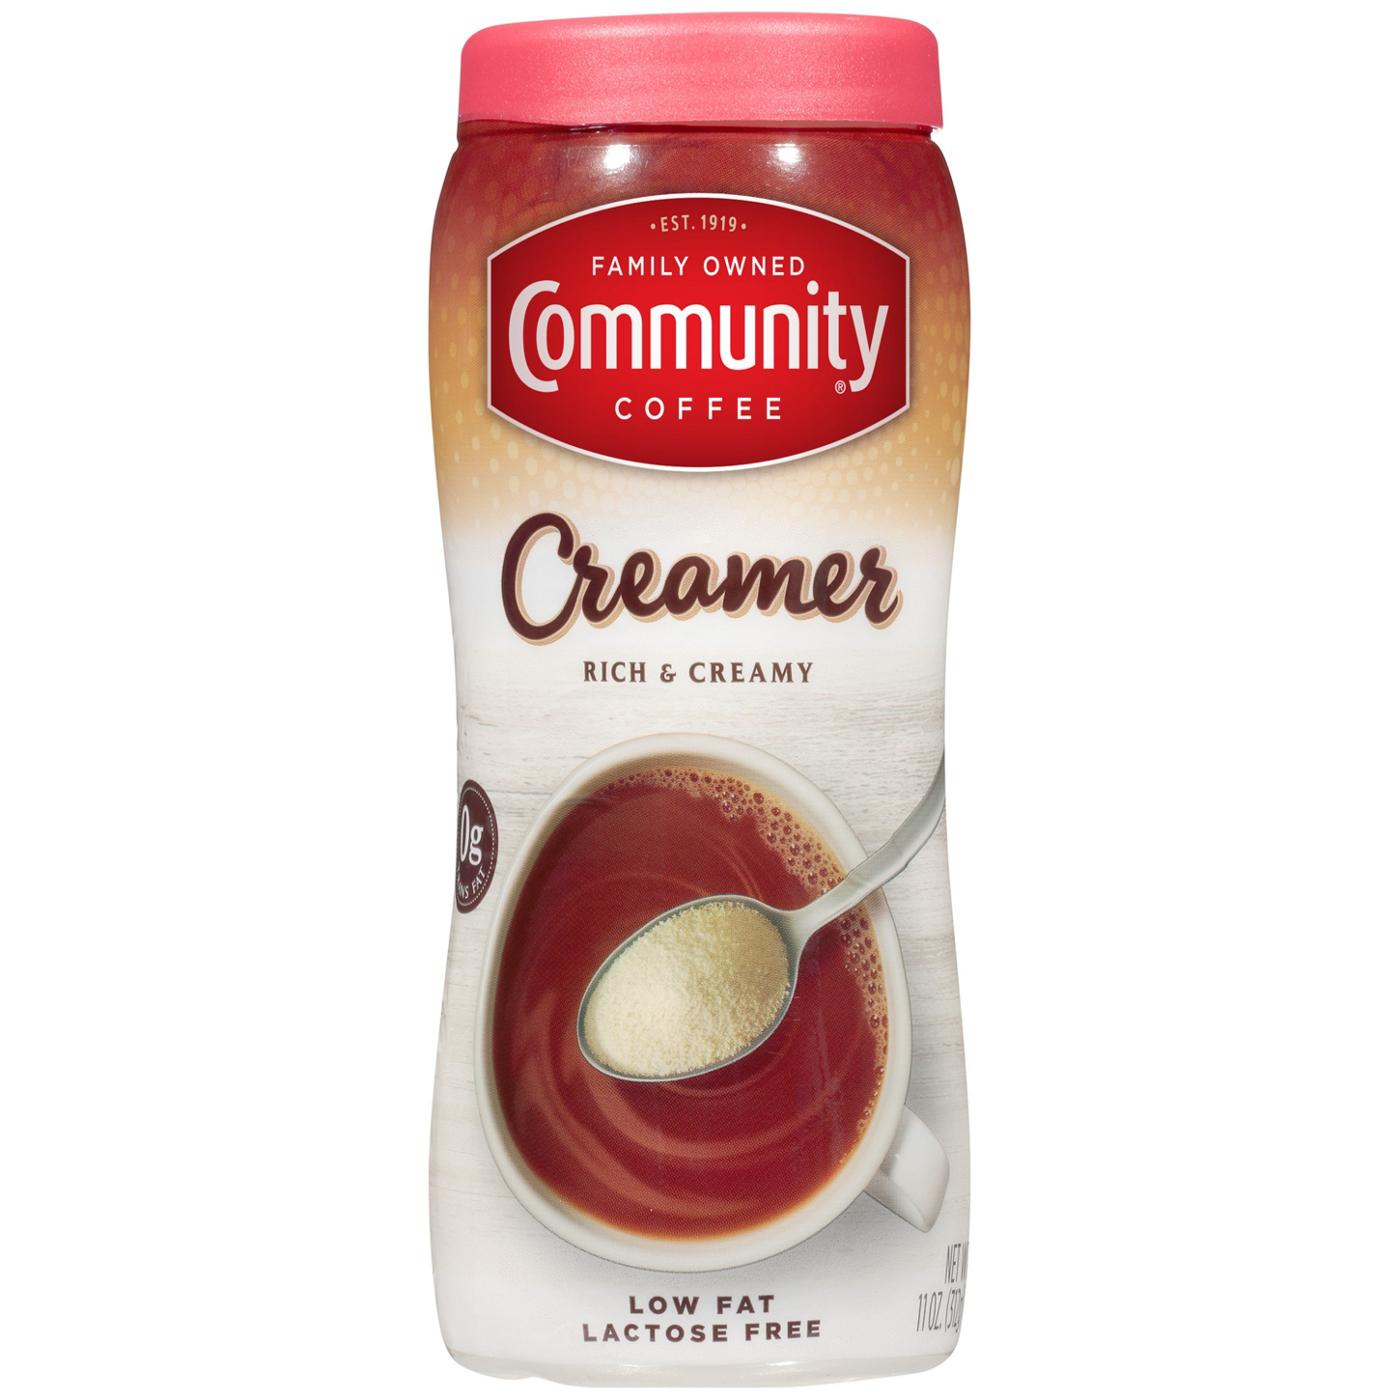 Community Coffee Powdered Coffee Creamer; image 2 of 2